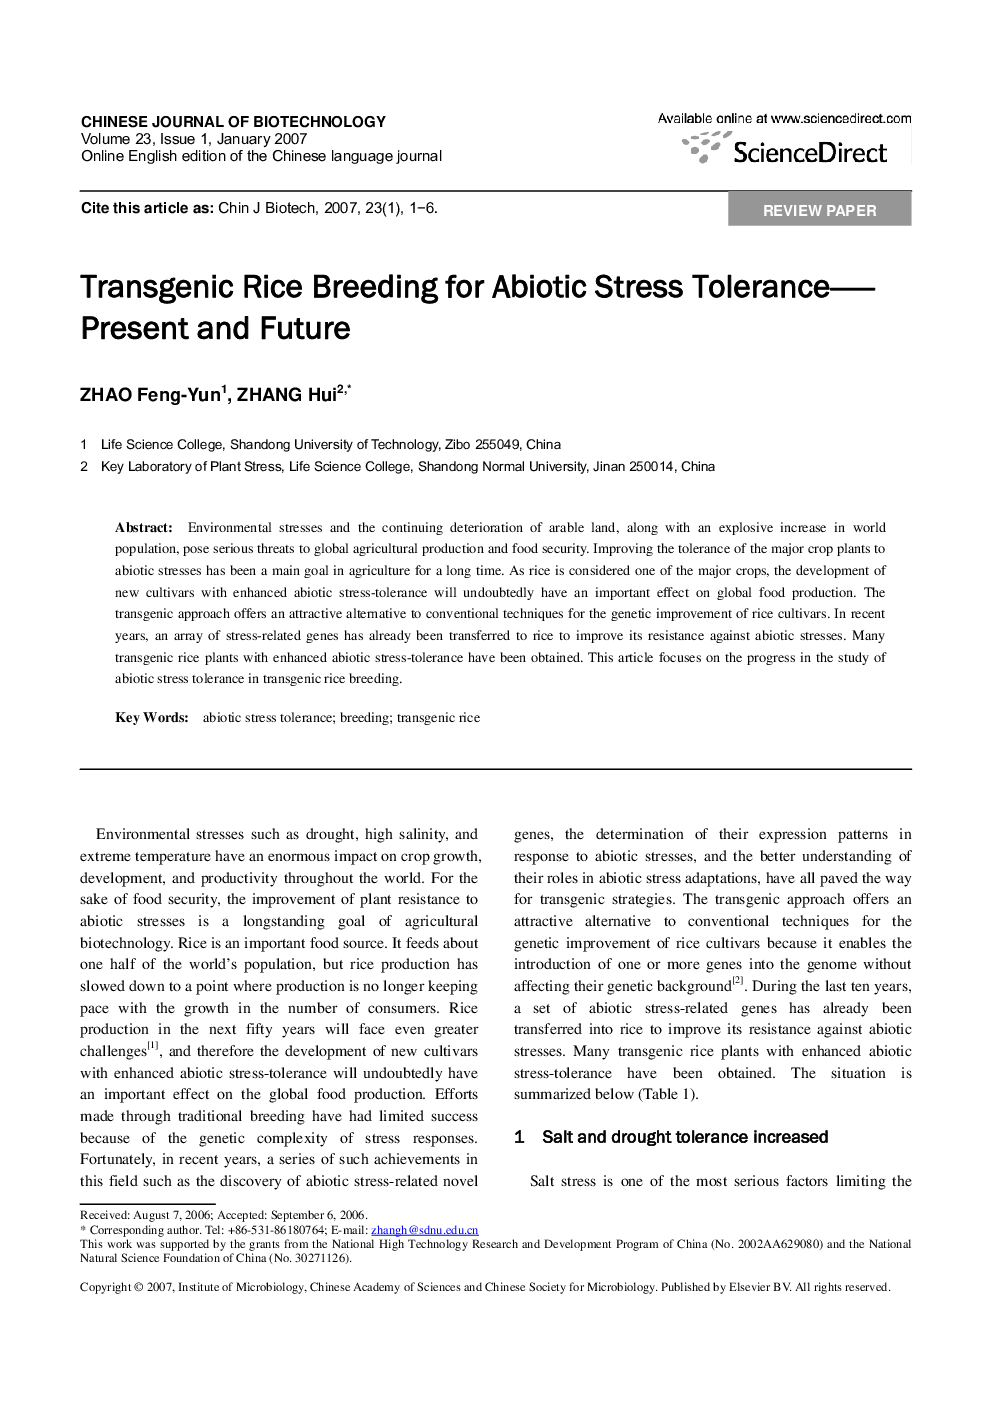 Transgenic Rice Breeding for Abiotic Stress Tolerance-Present and Future